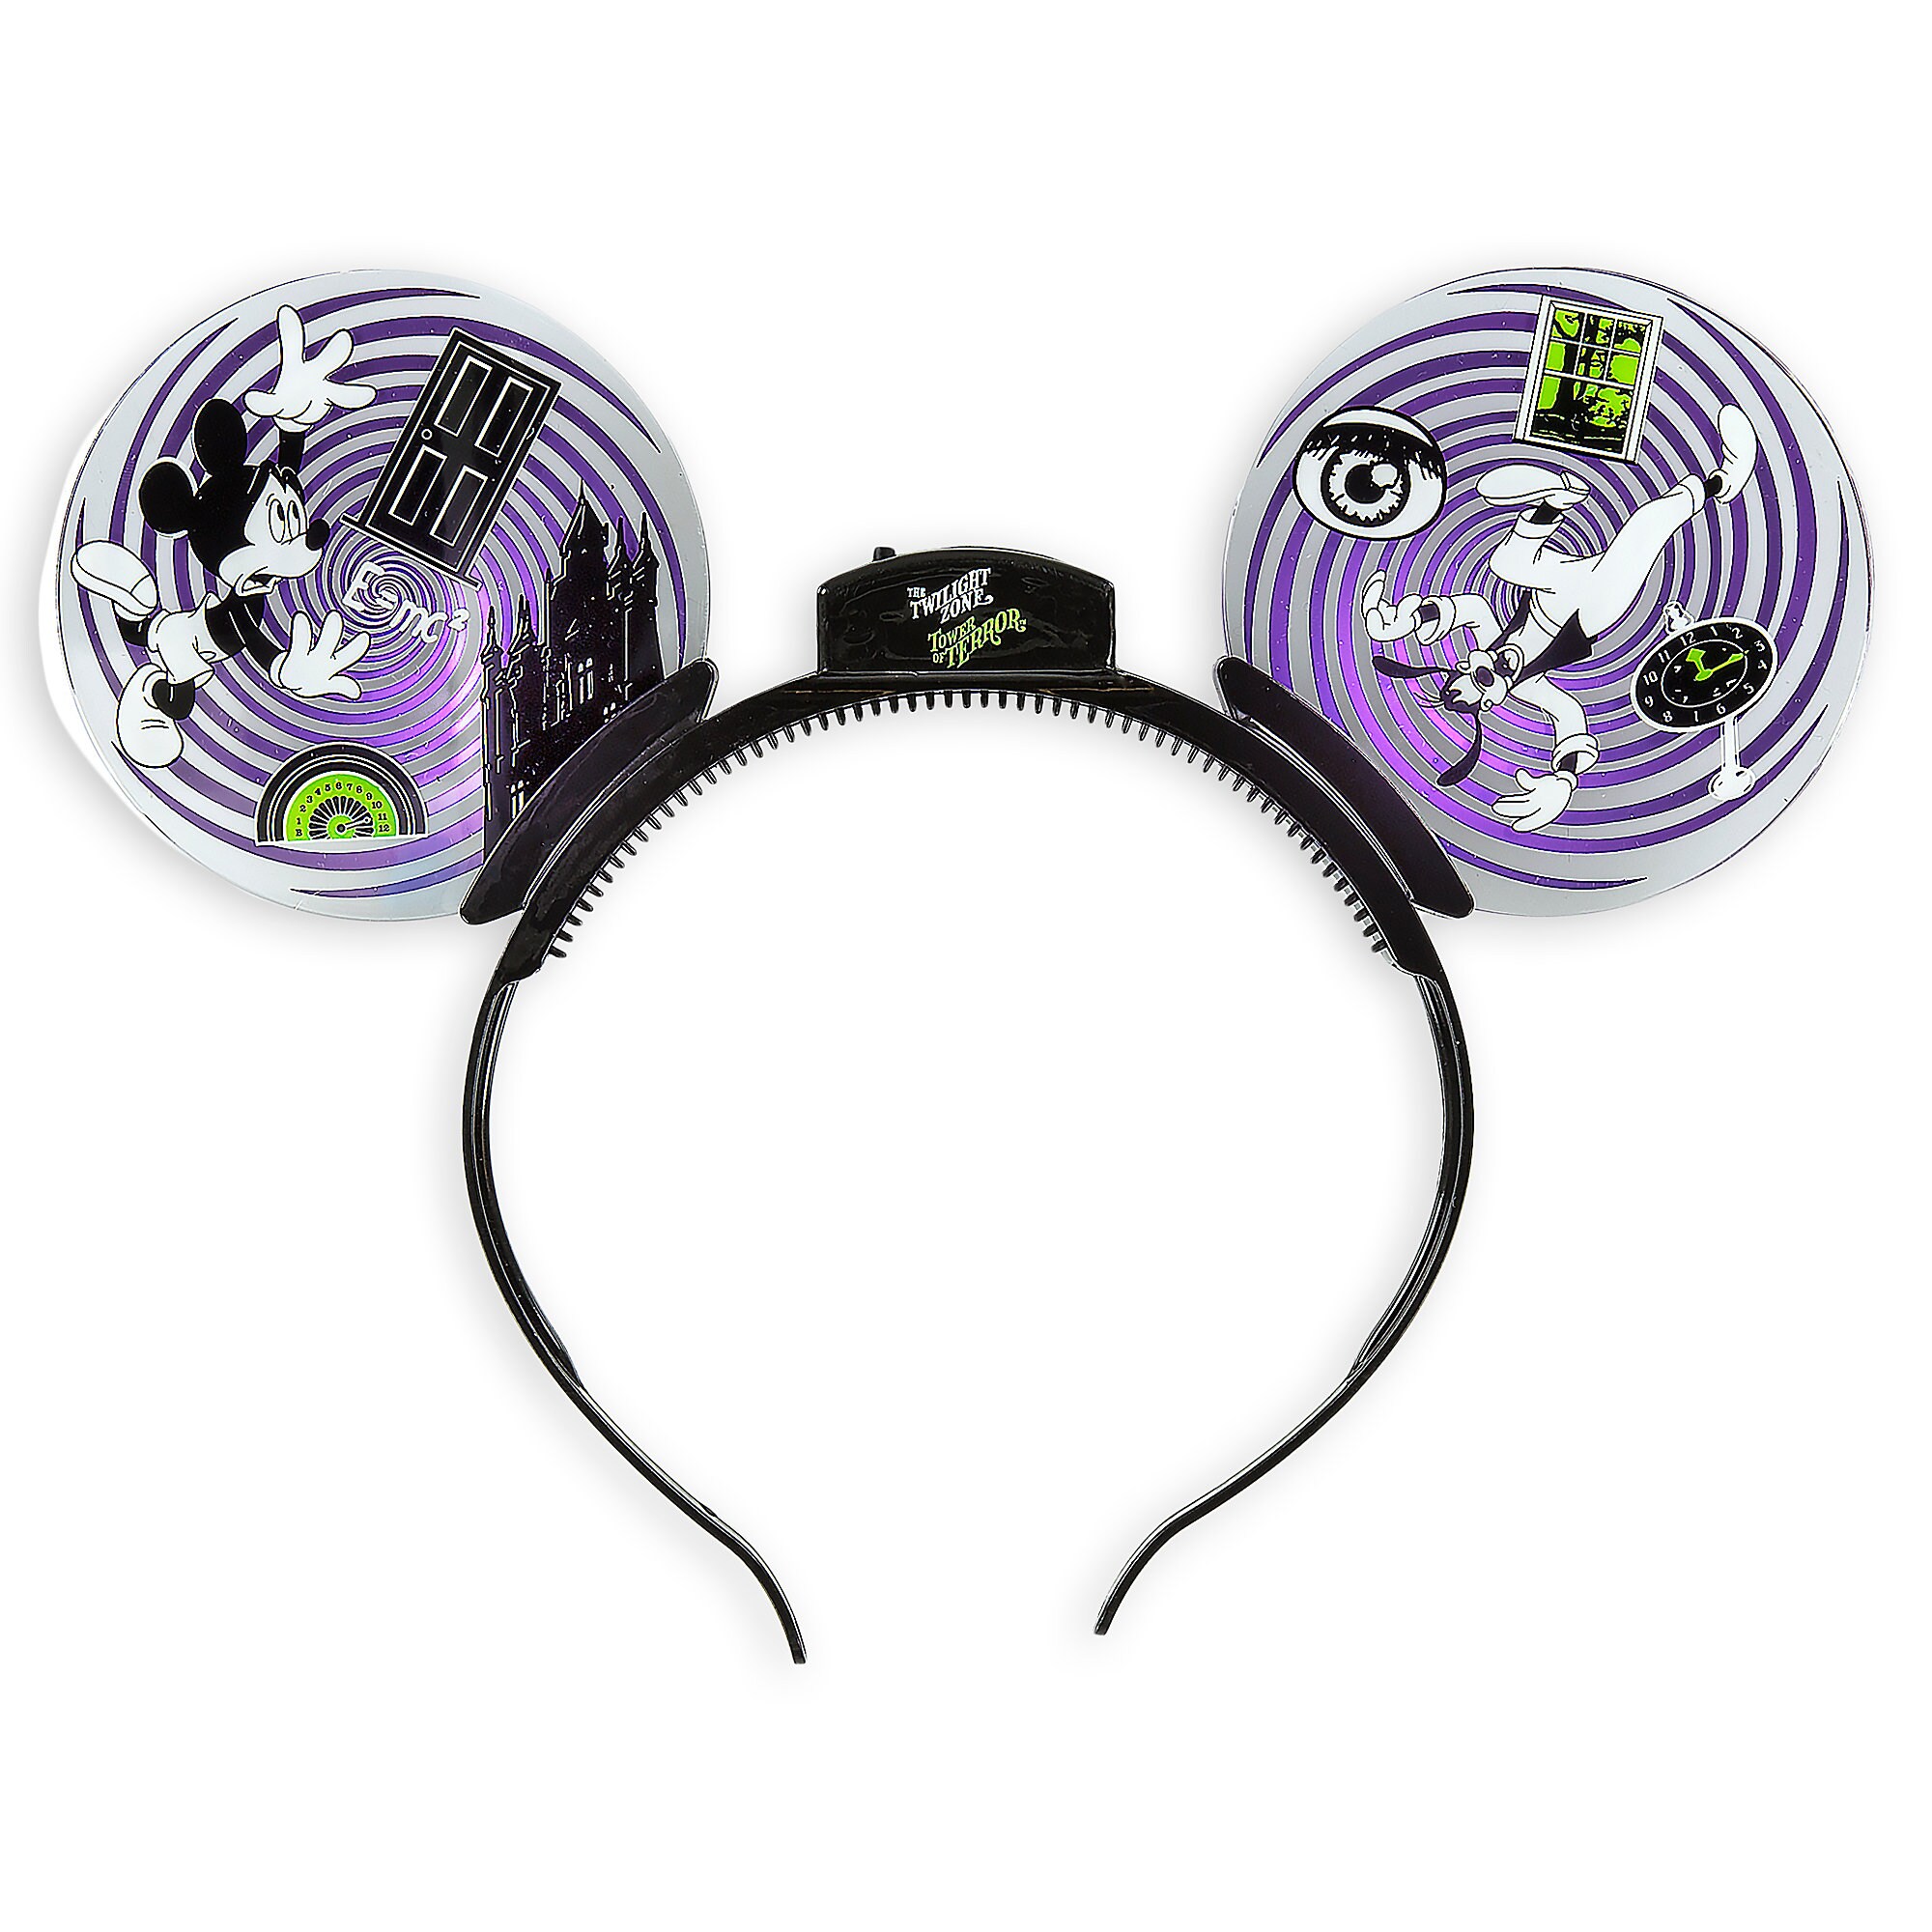 Mickey Mouse and Goofy Tower of Terror Ear Headband